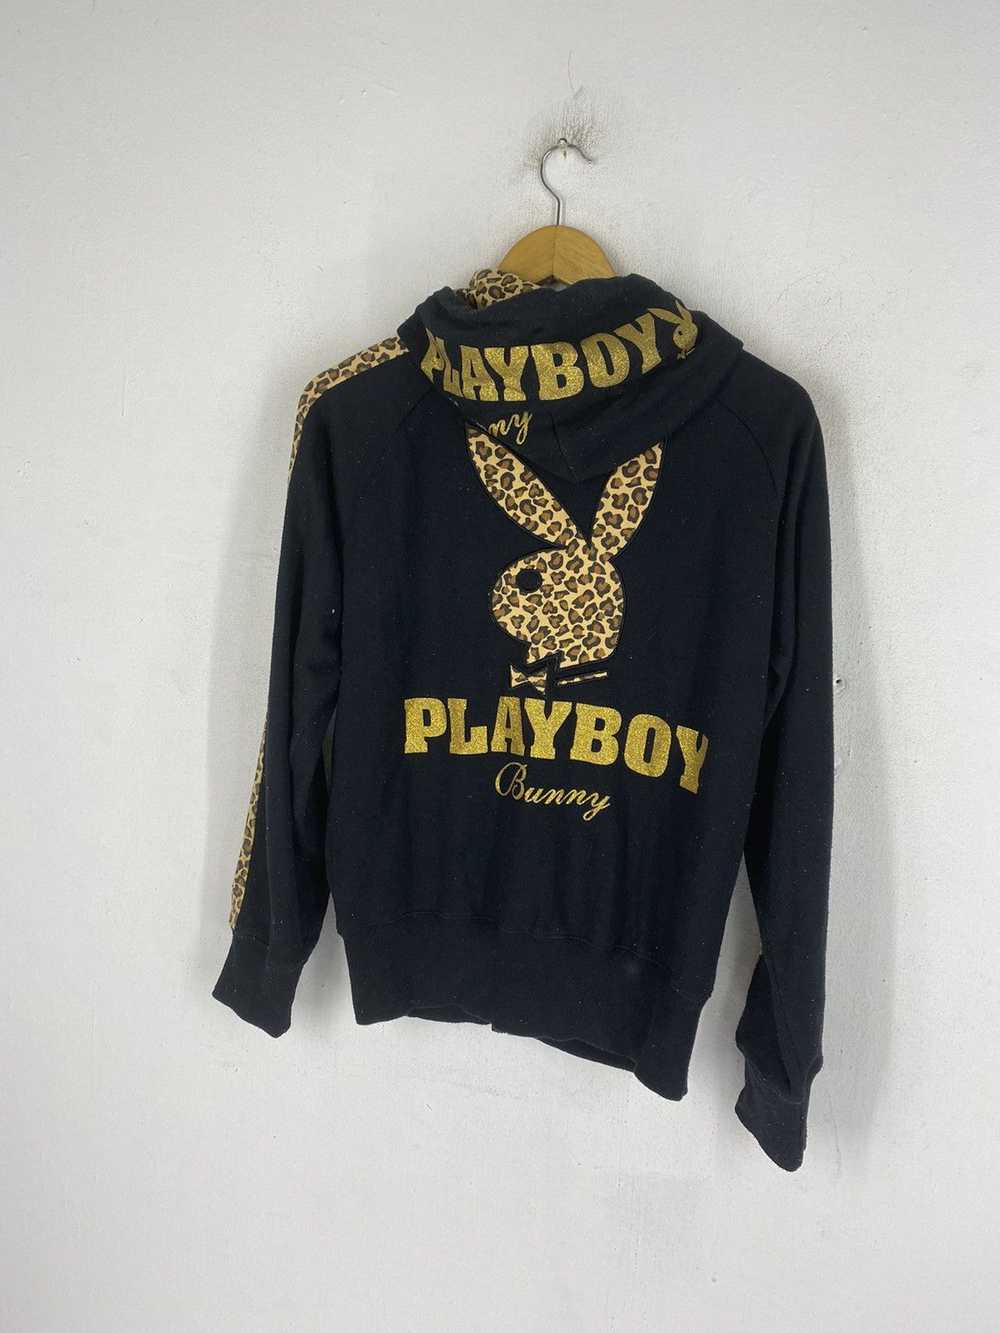 Playboy Playboy bunny big logo leopard - image 2